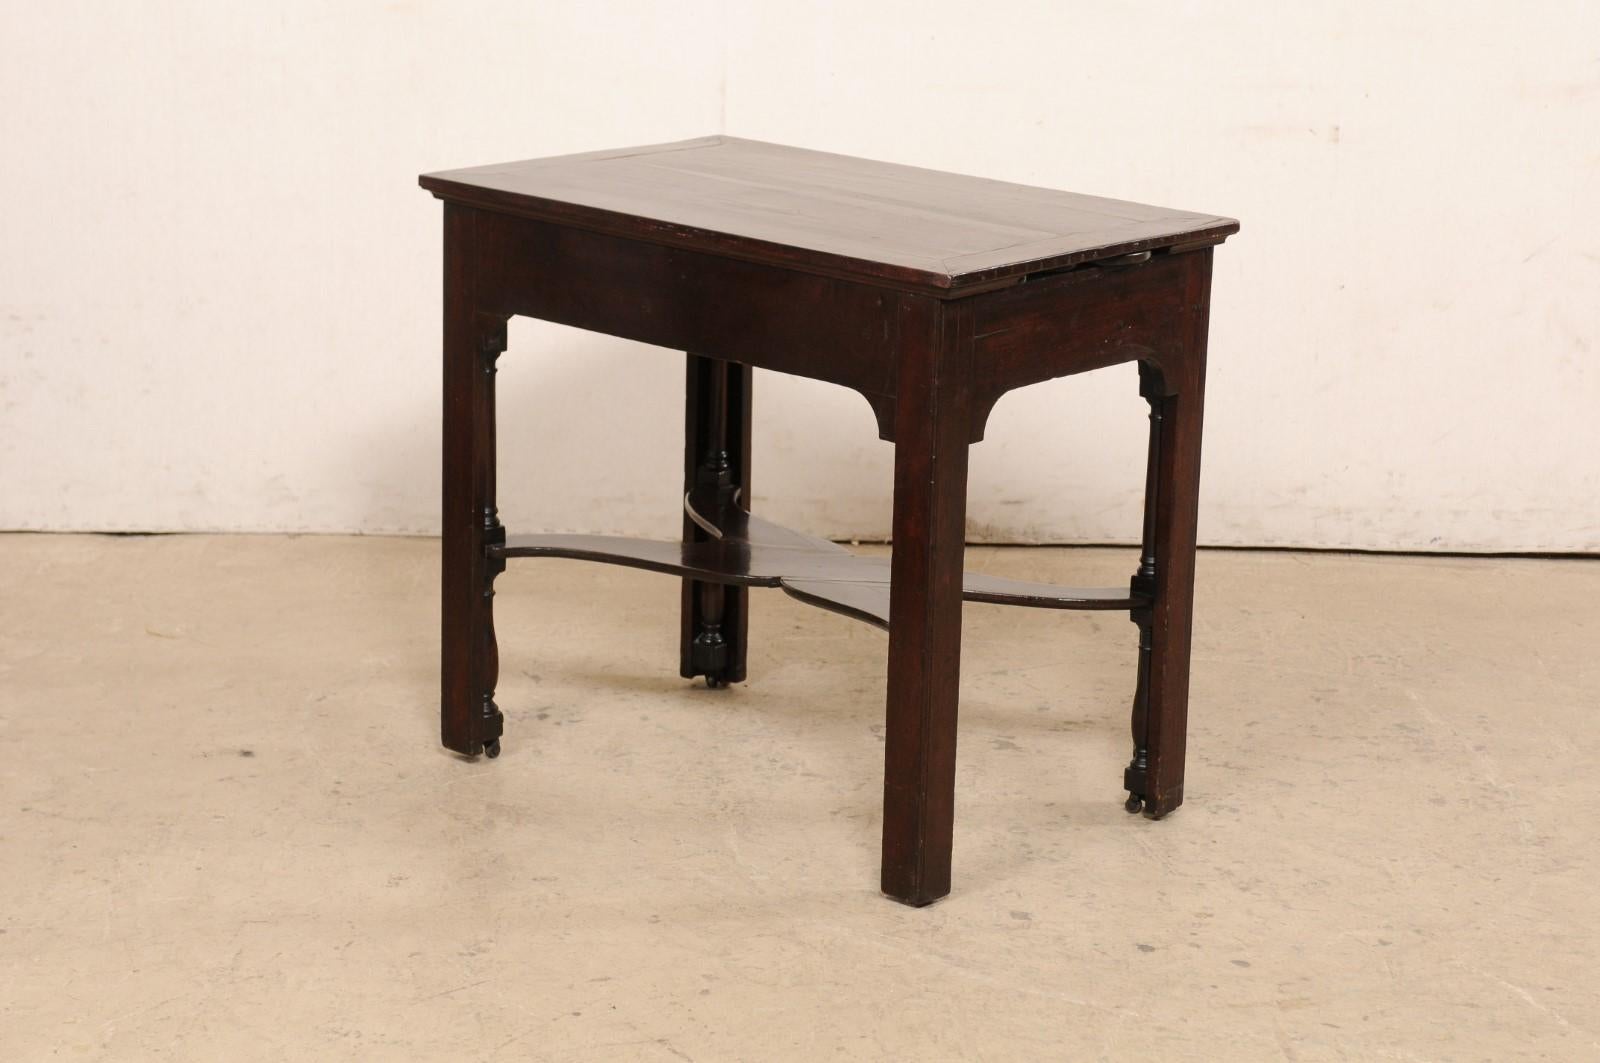 18th C. English Architect's Table w/Unique Legs, Expanding Top, & Candle Shelves For Sale 3